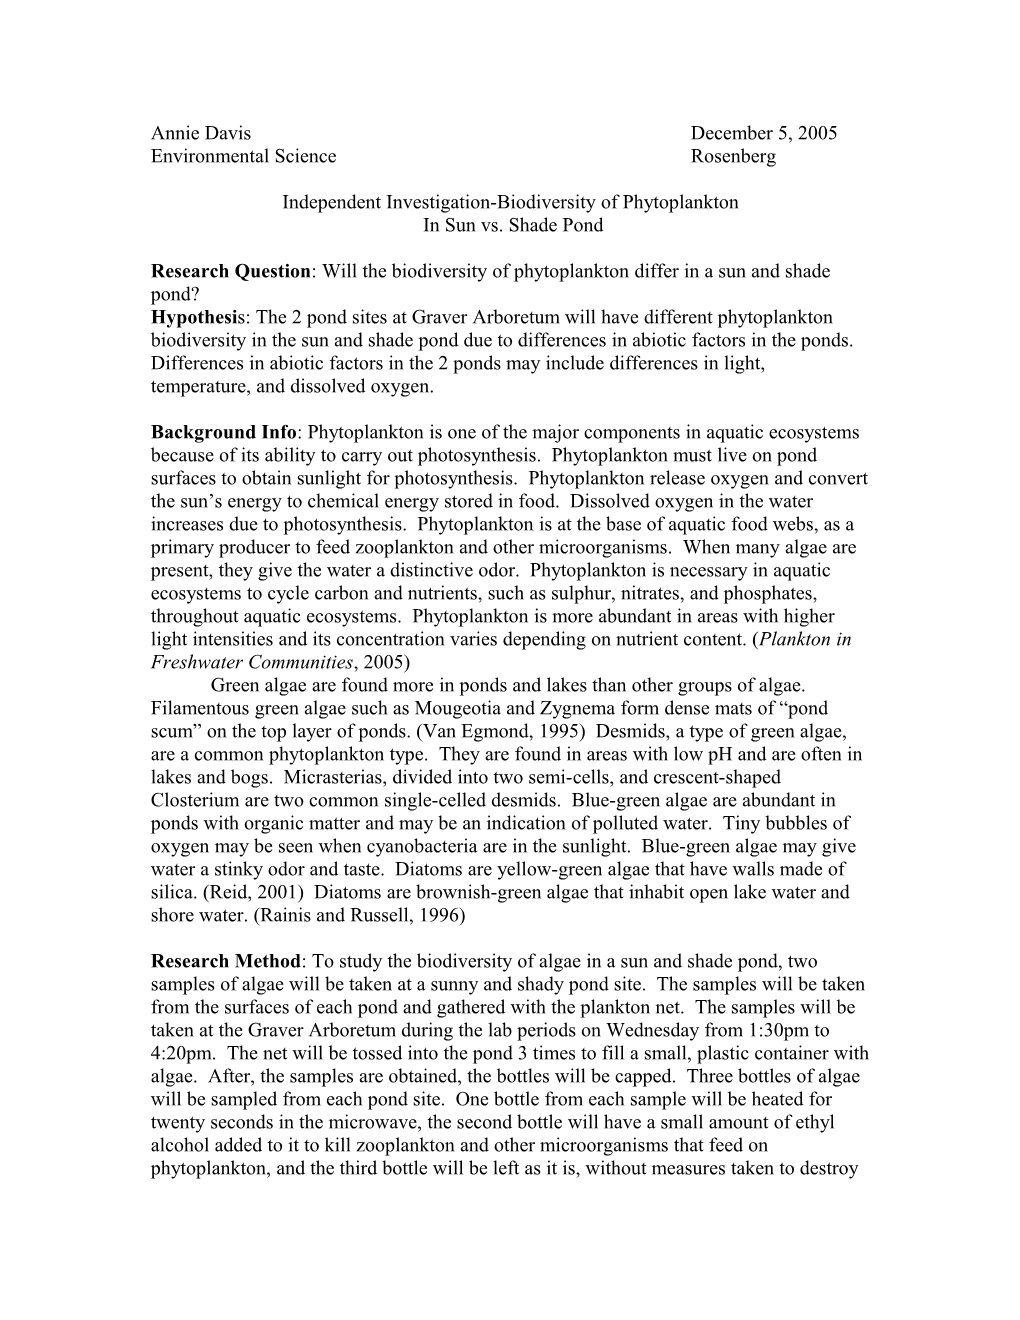 Independent Investigation-Biodiversity of Phytoplankton